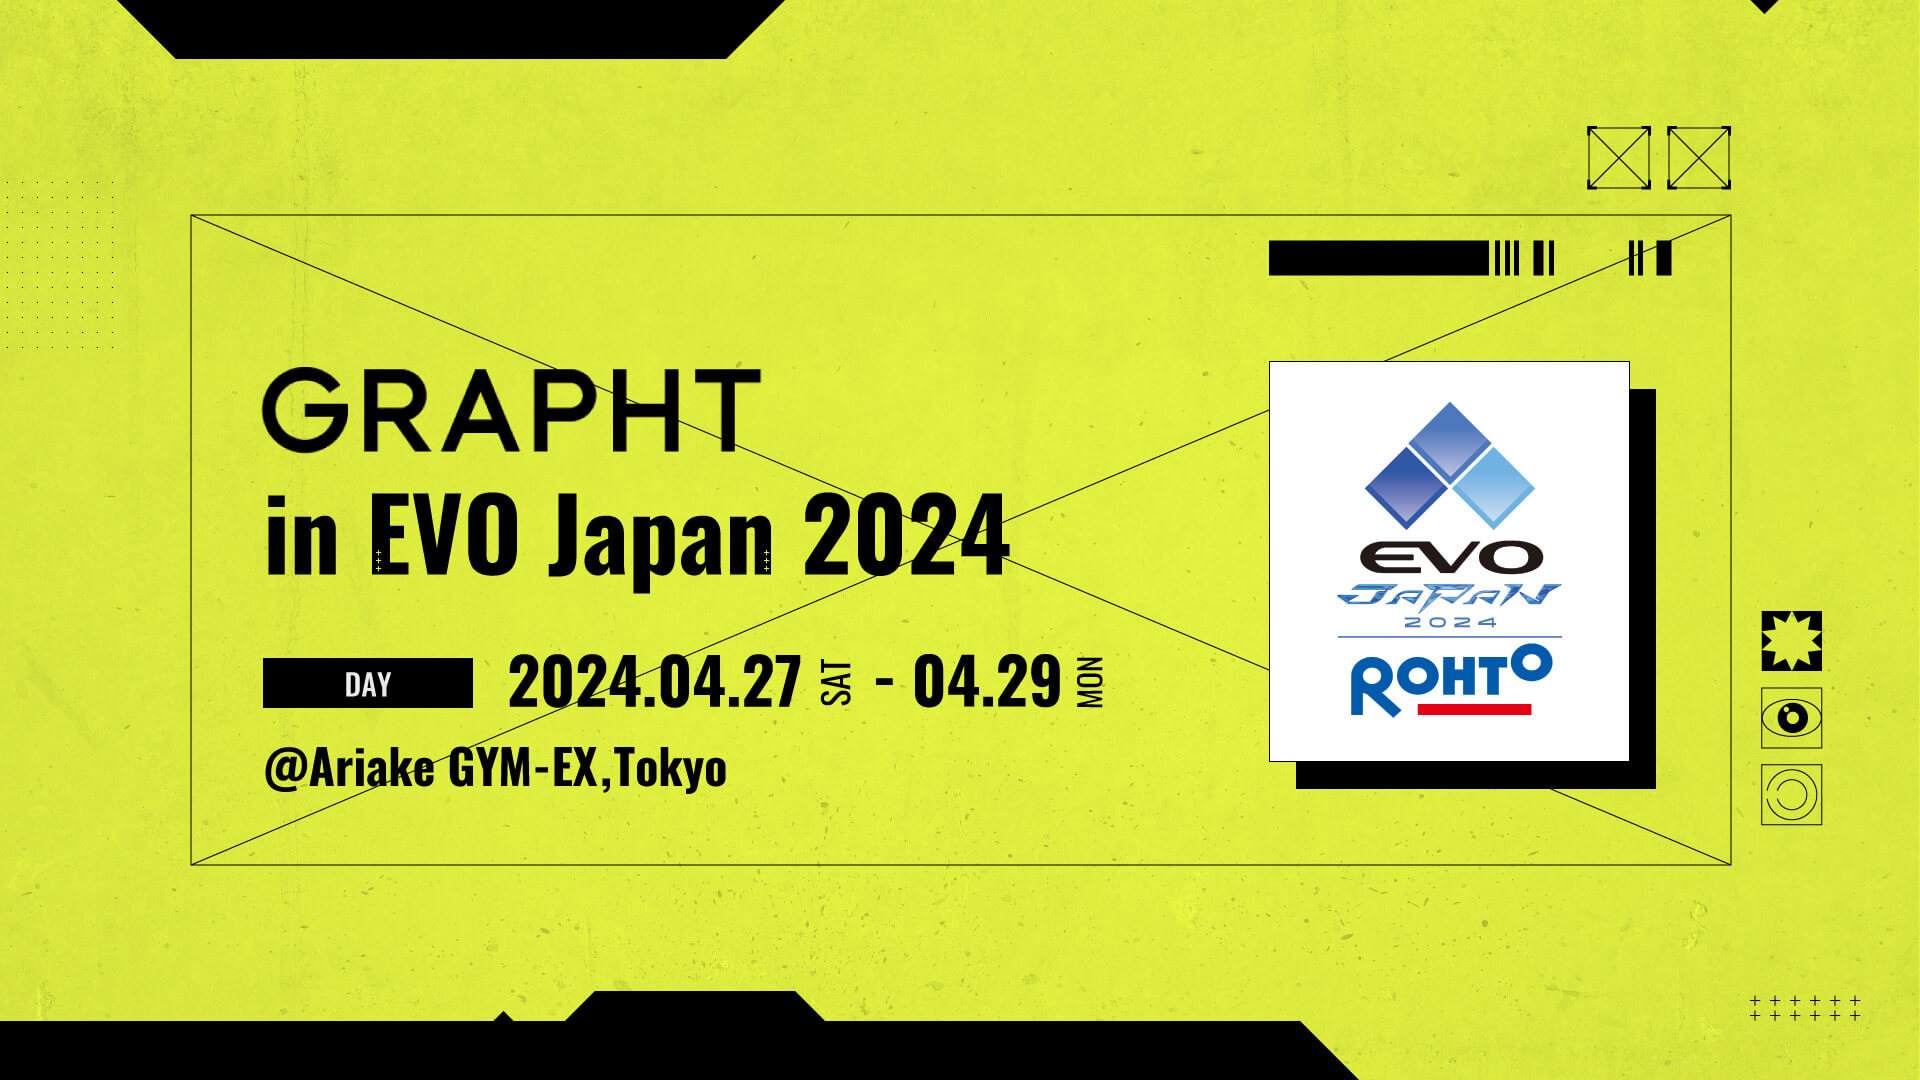 MSY、「EVO Japan 2024」にGRAPHTブースを出展決定！
新製品の試遊や、新作アイテムを中心とした物販を展開